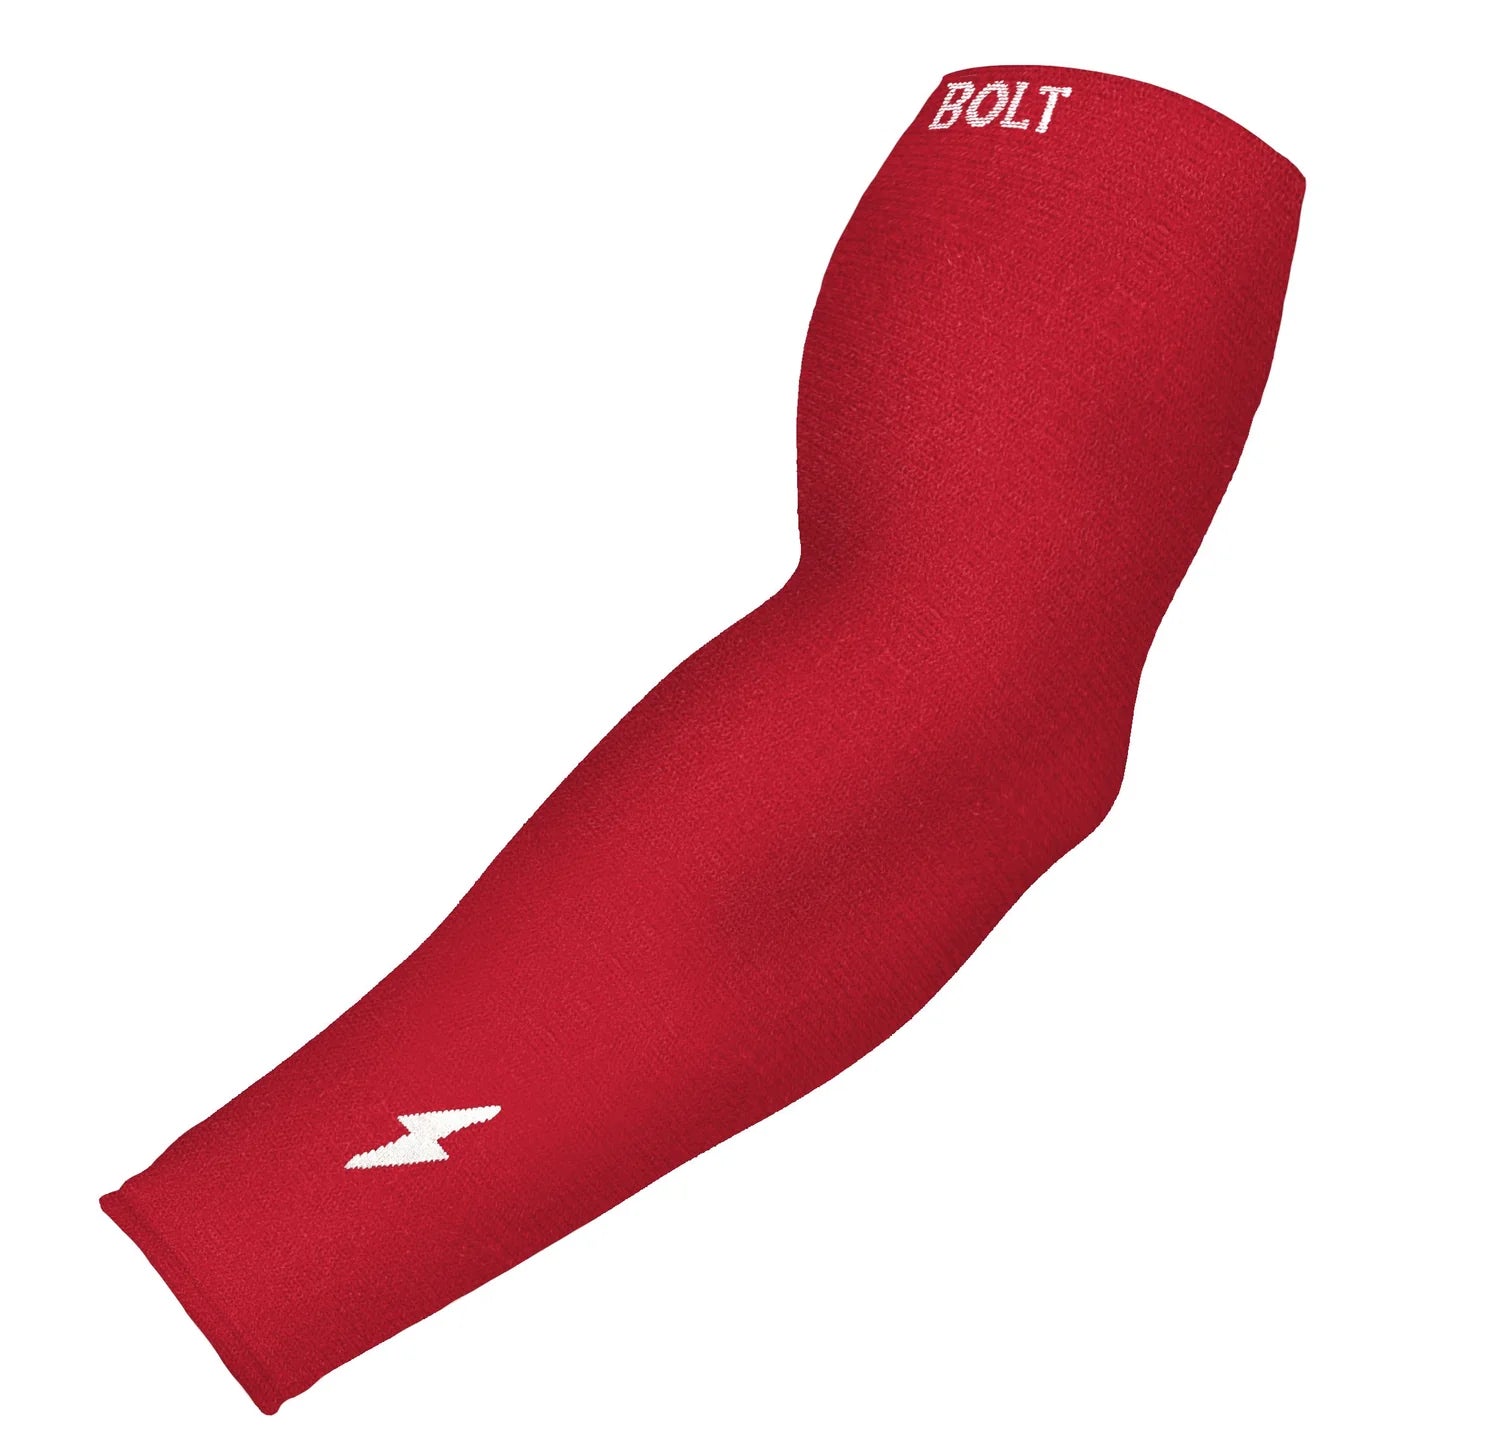 BRUCE BOLT Premium Red Arm Sleeve